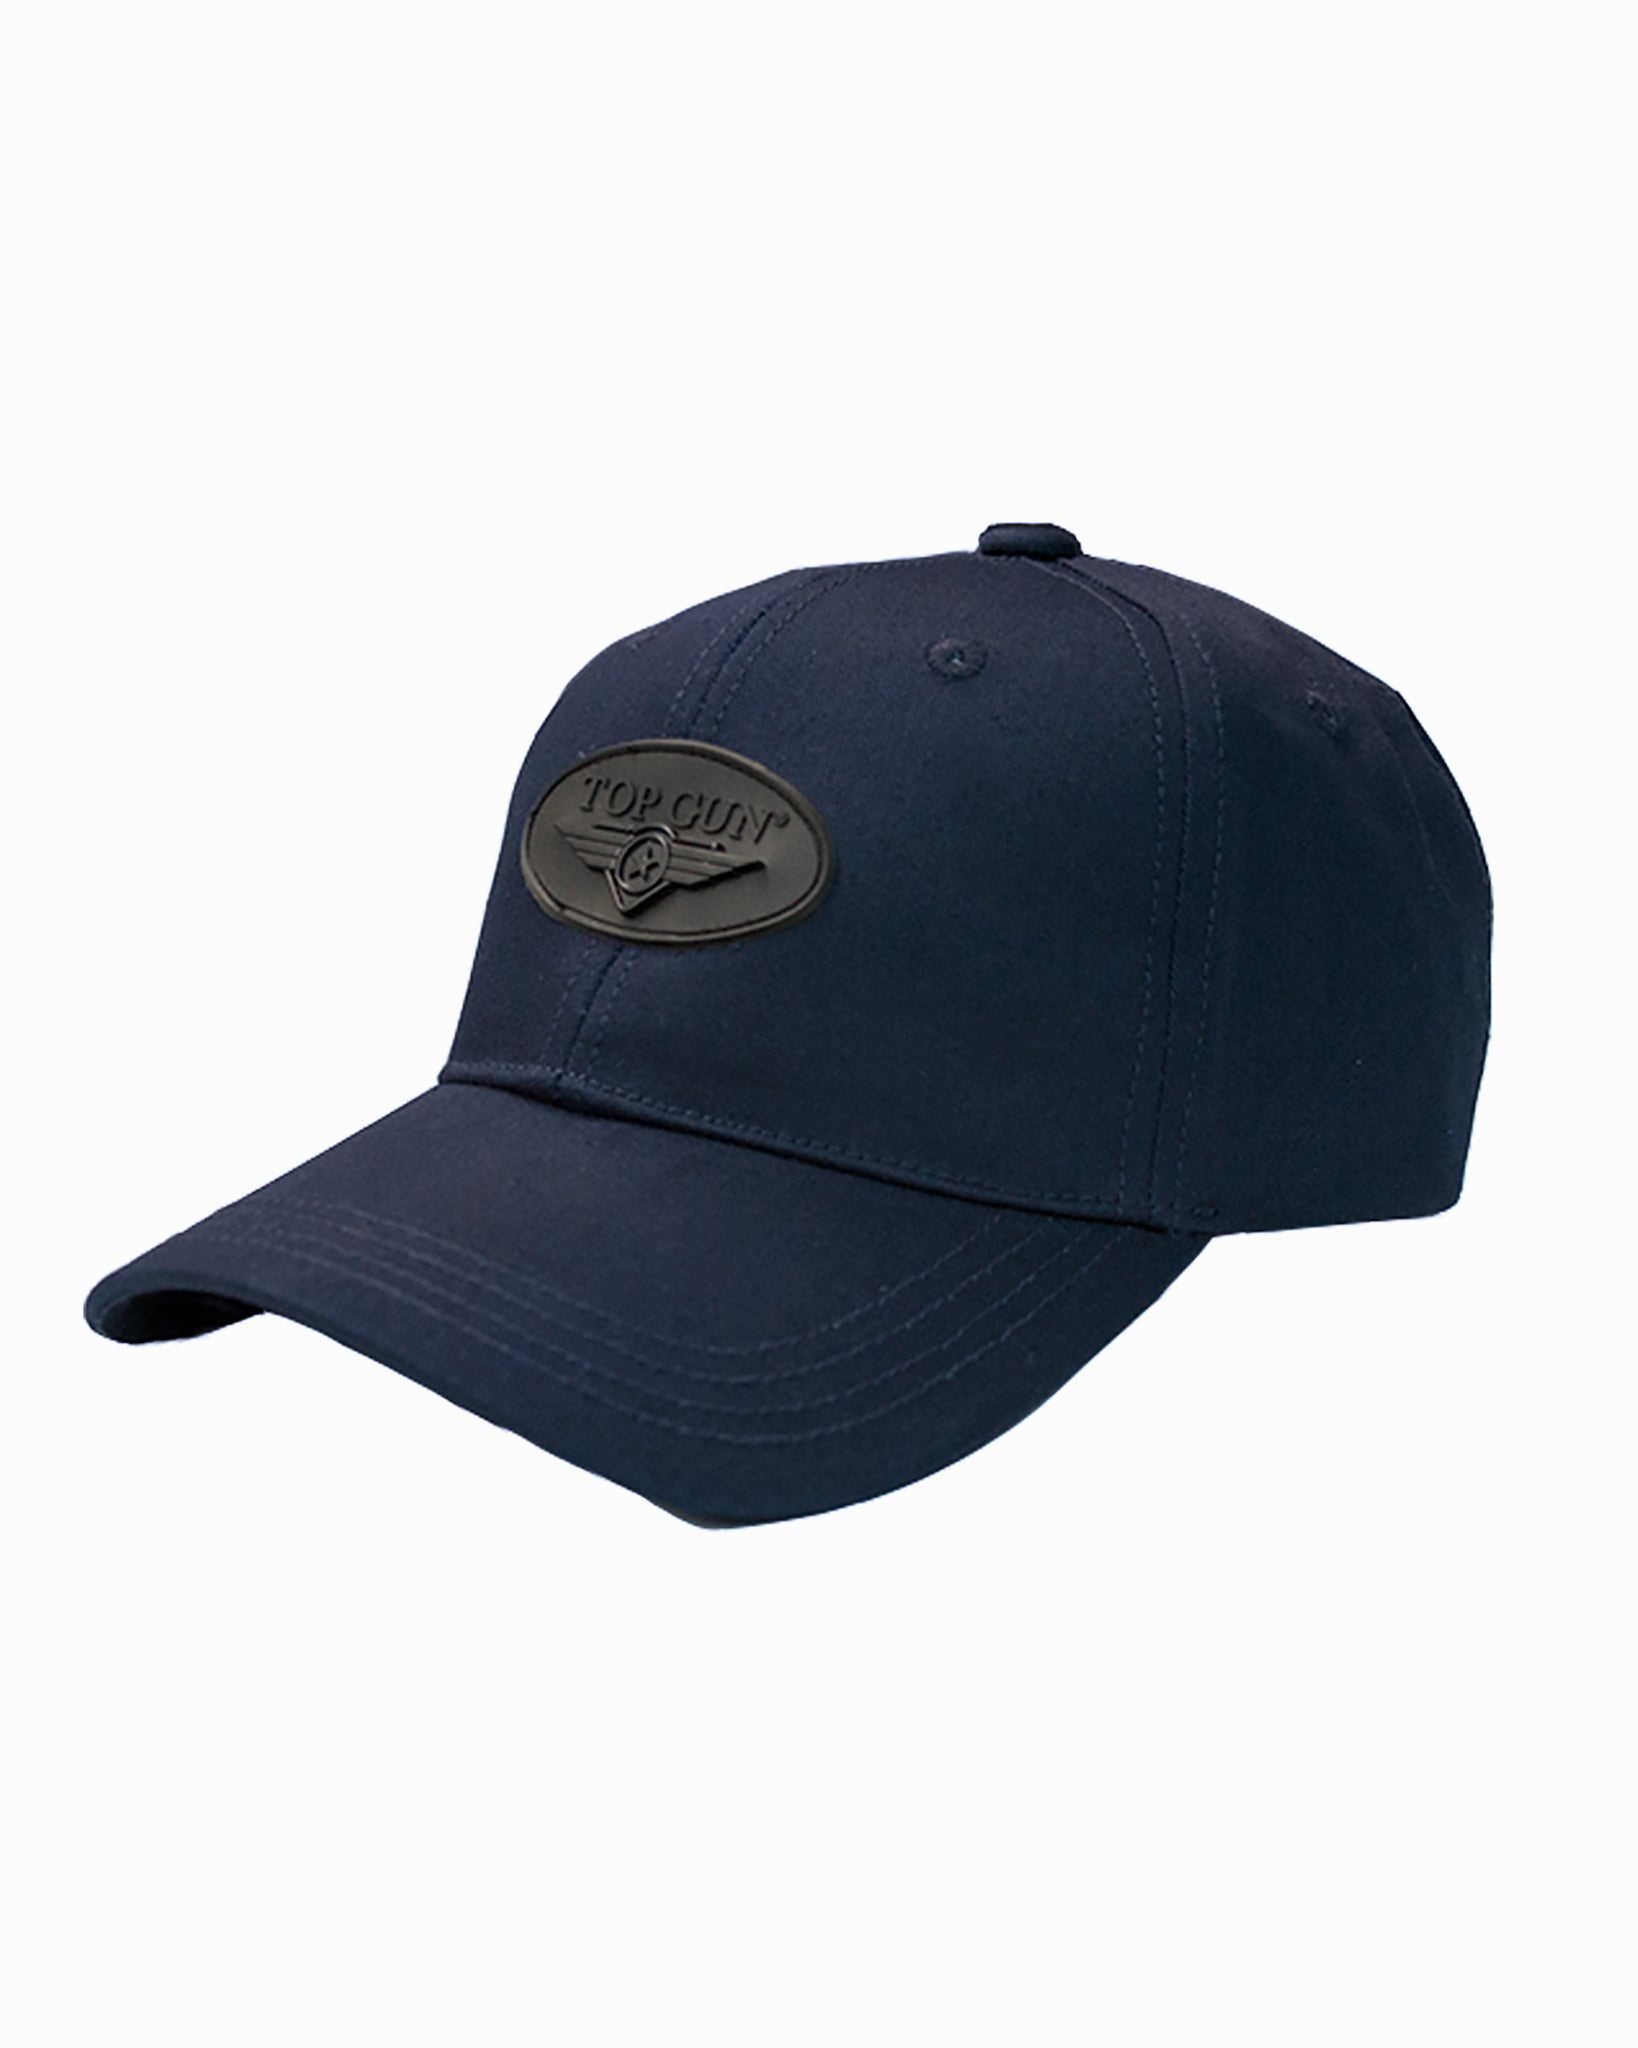 Top Gun: Maverick Caps | | Store Trucker Hat, Beanie, Official – Store Gun Cap, Top More and